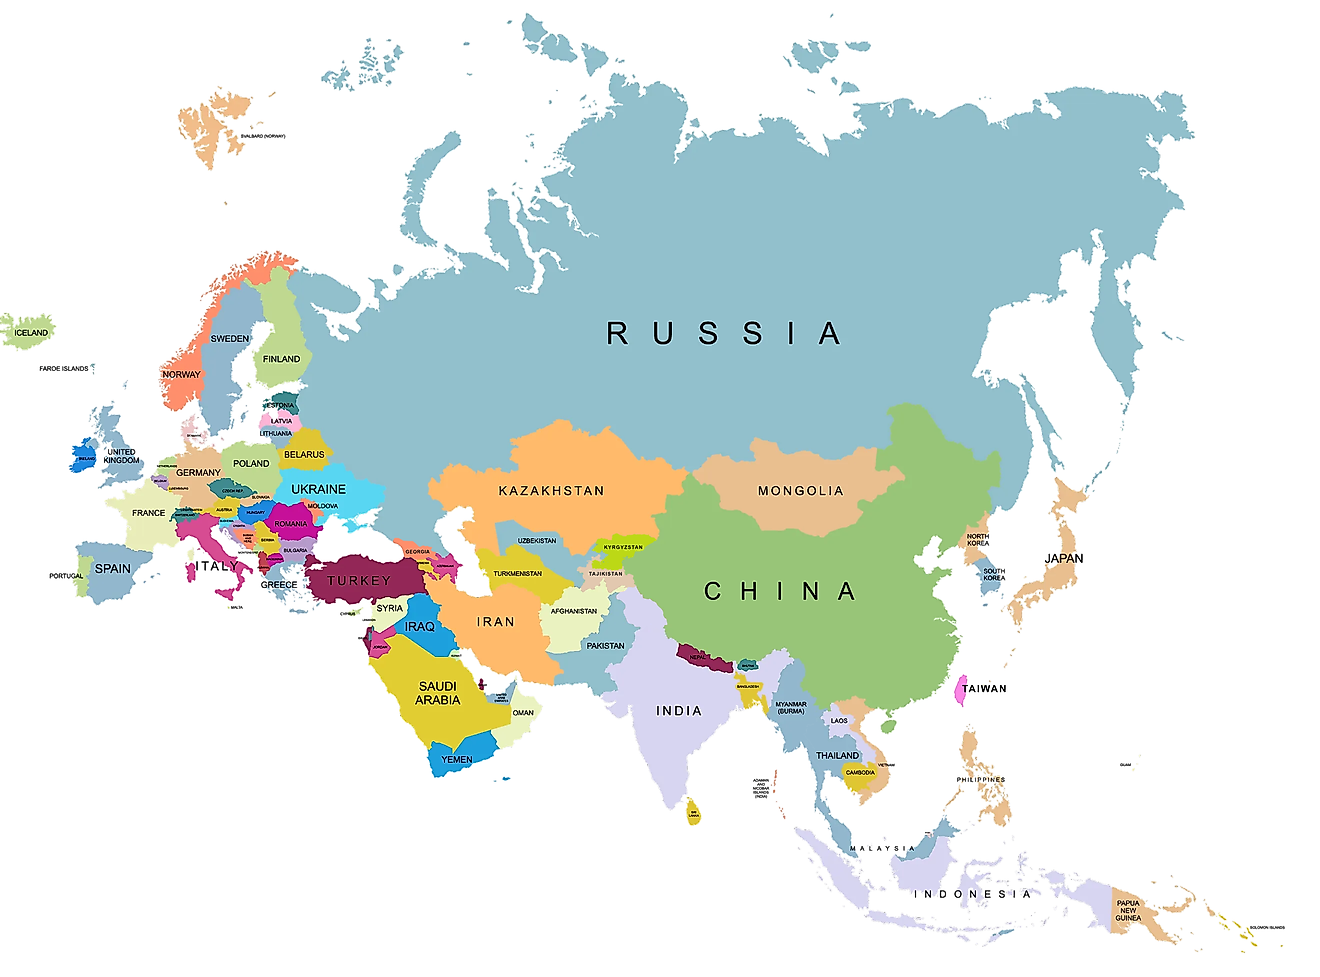 The countries of Eurasia.